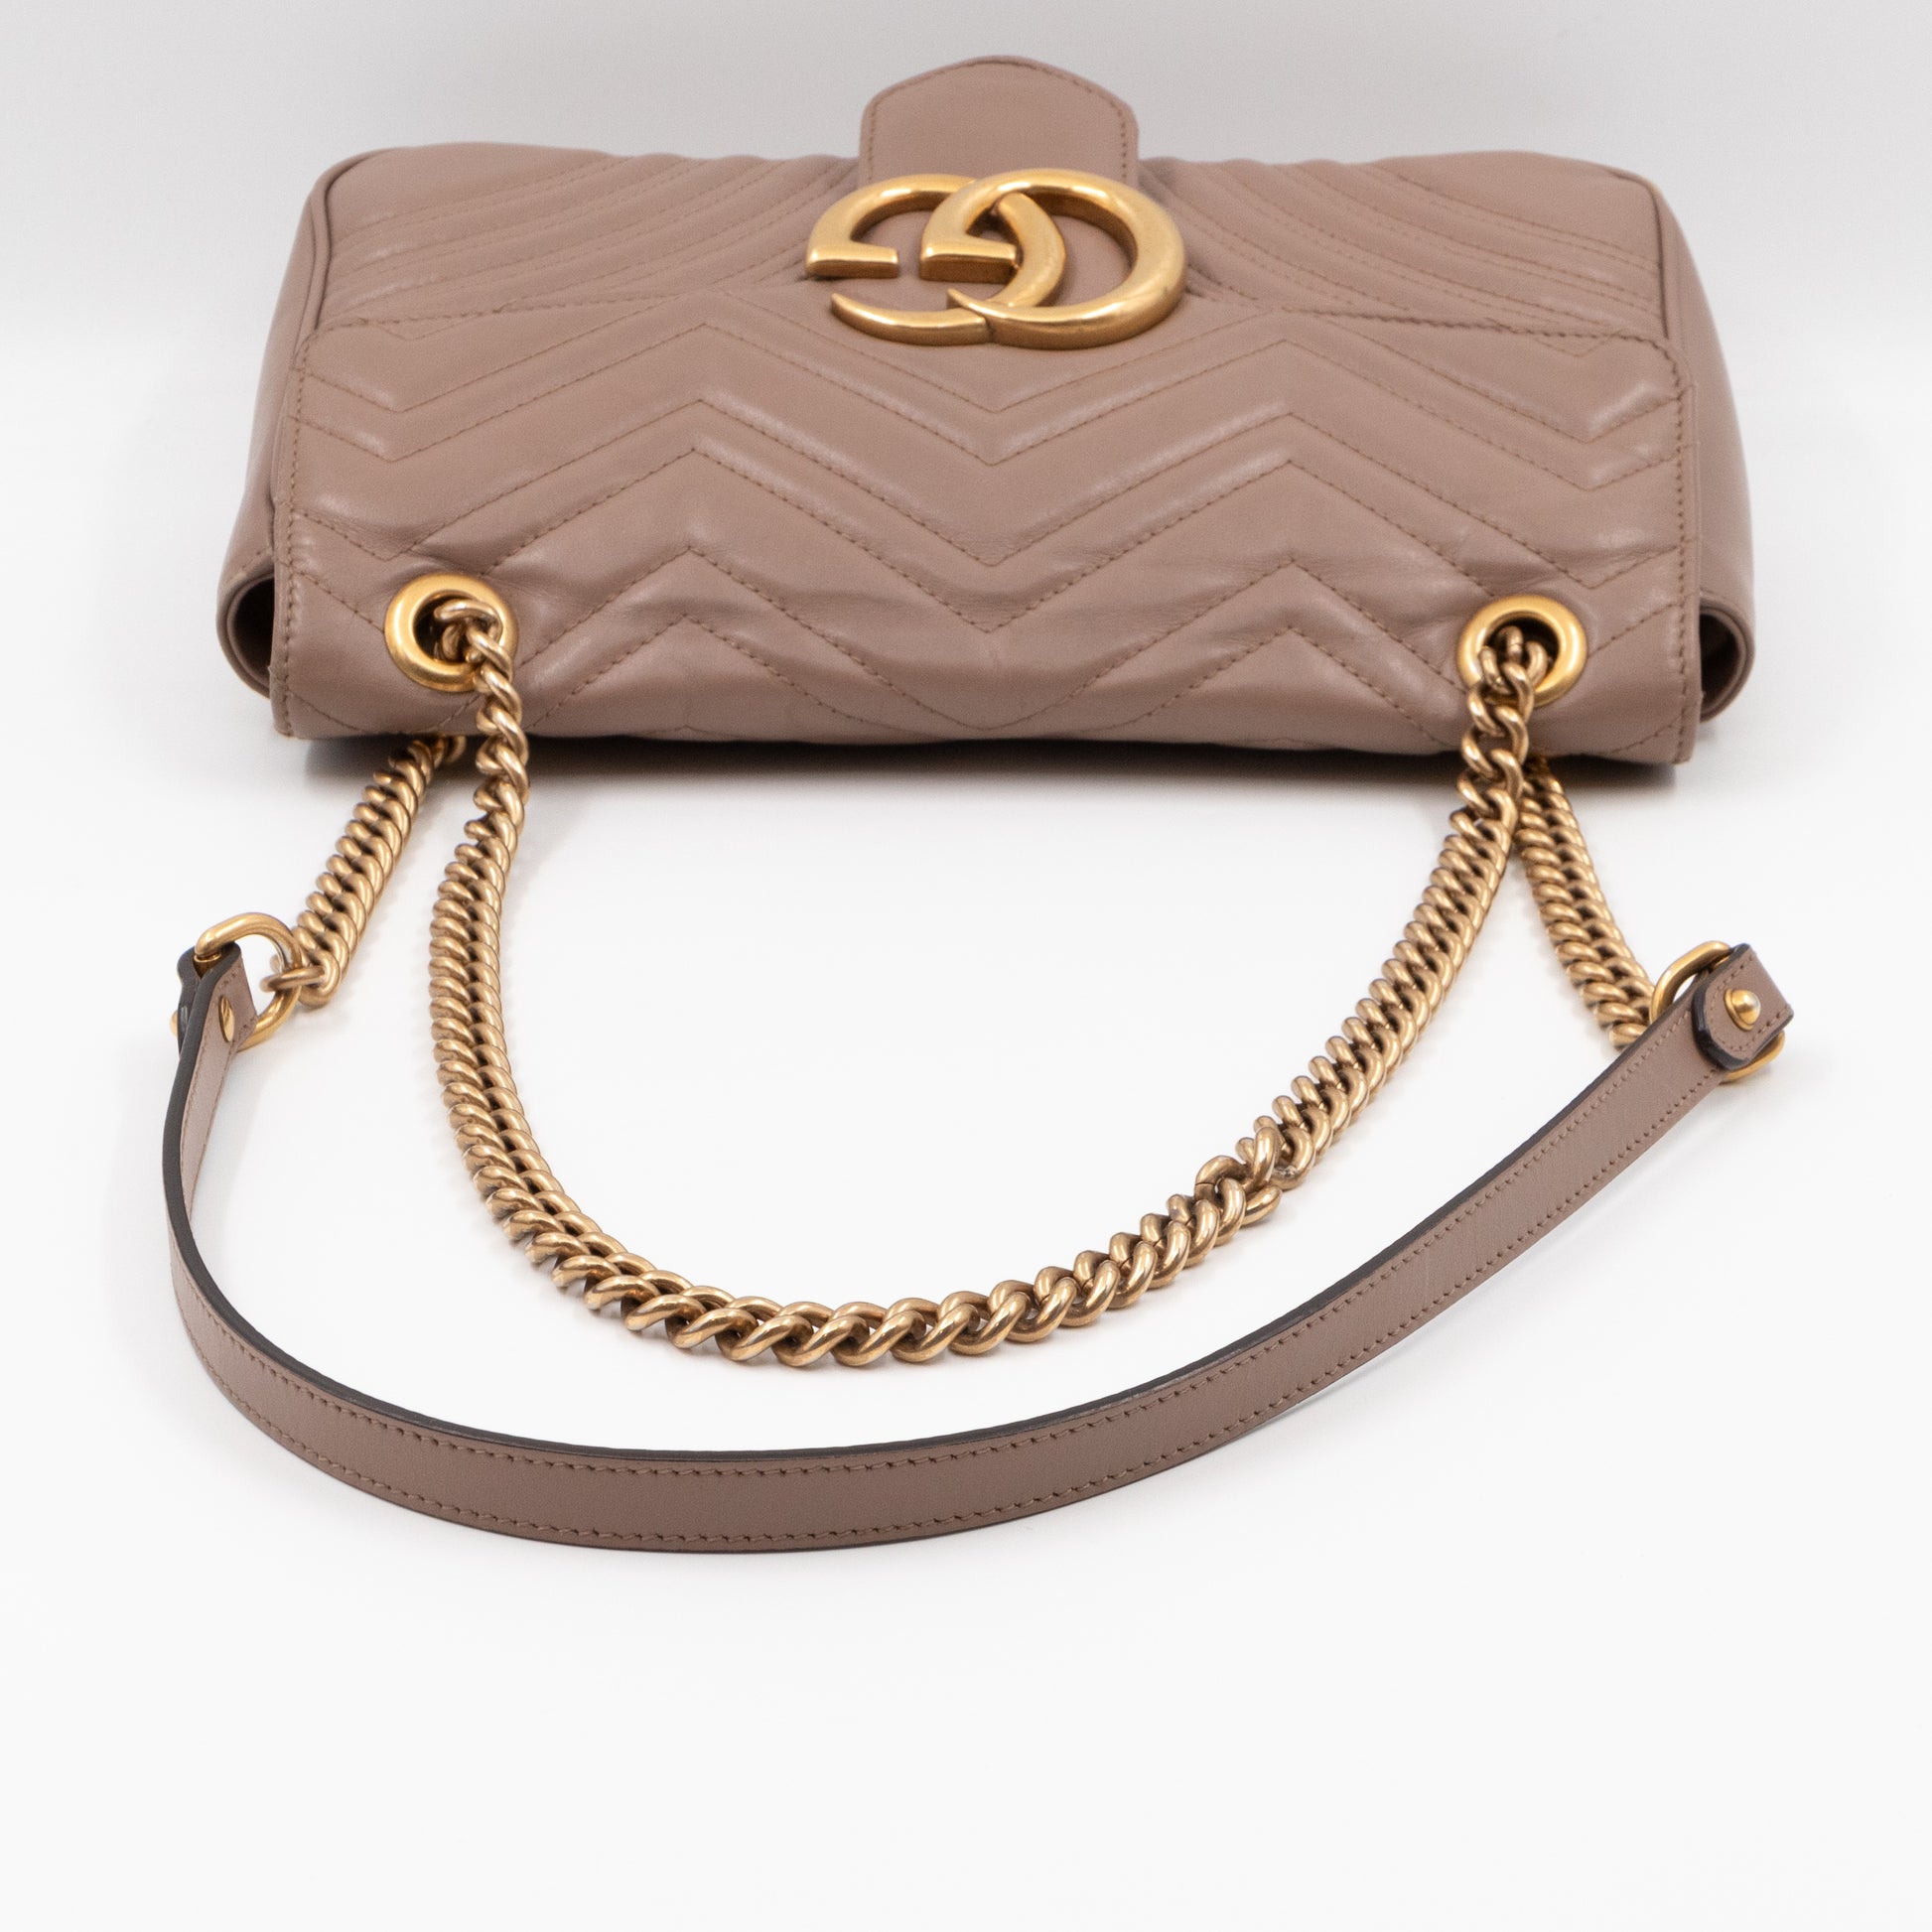 Gucci 443496 Dusty Pink Leather GG Marmont Medium Matelasse Shoulder Bag  Purse